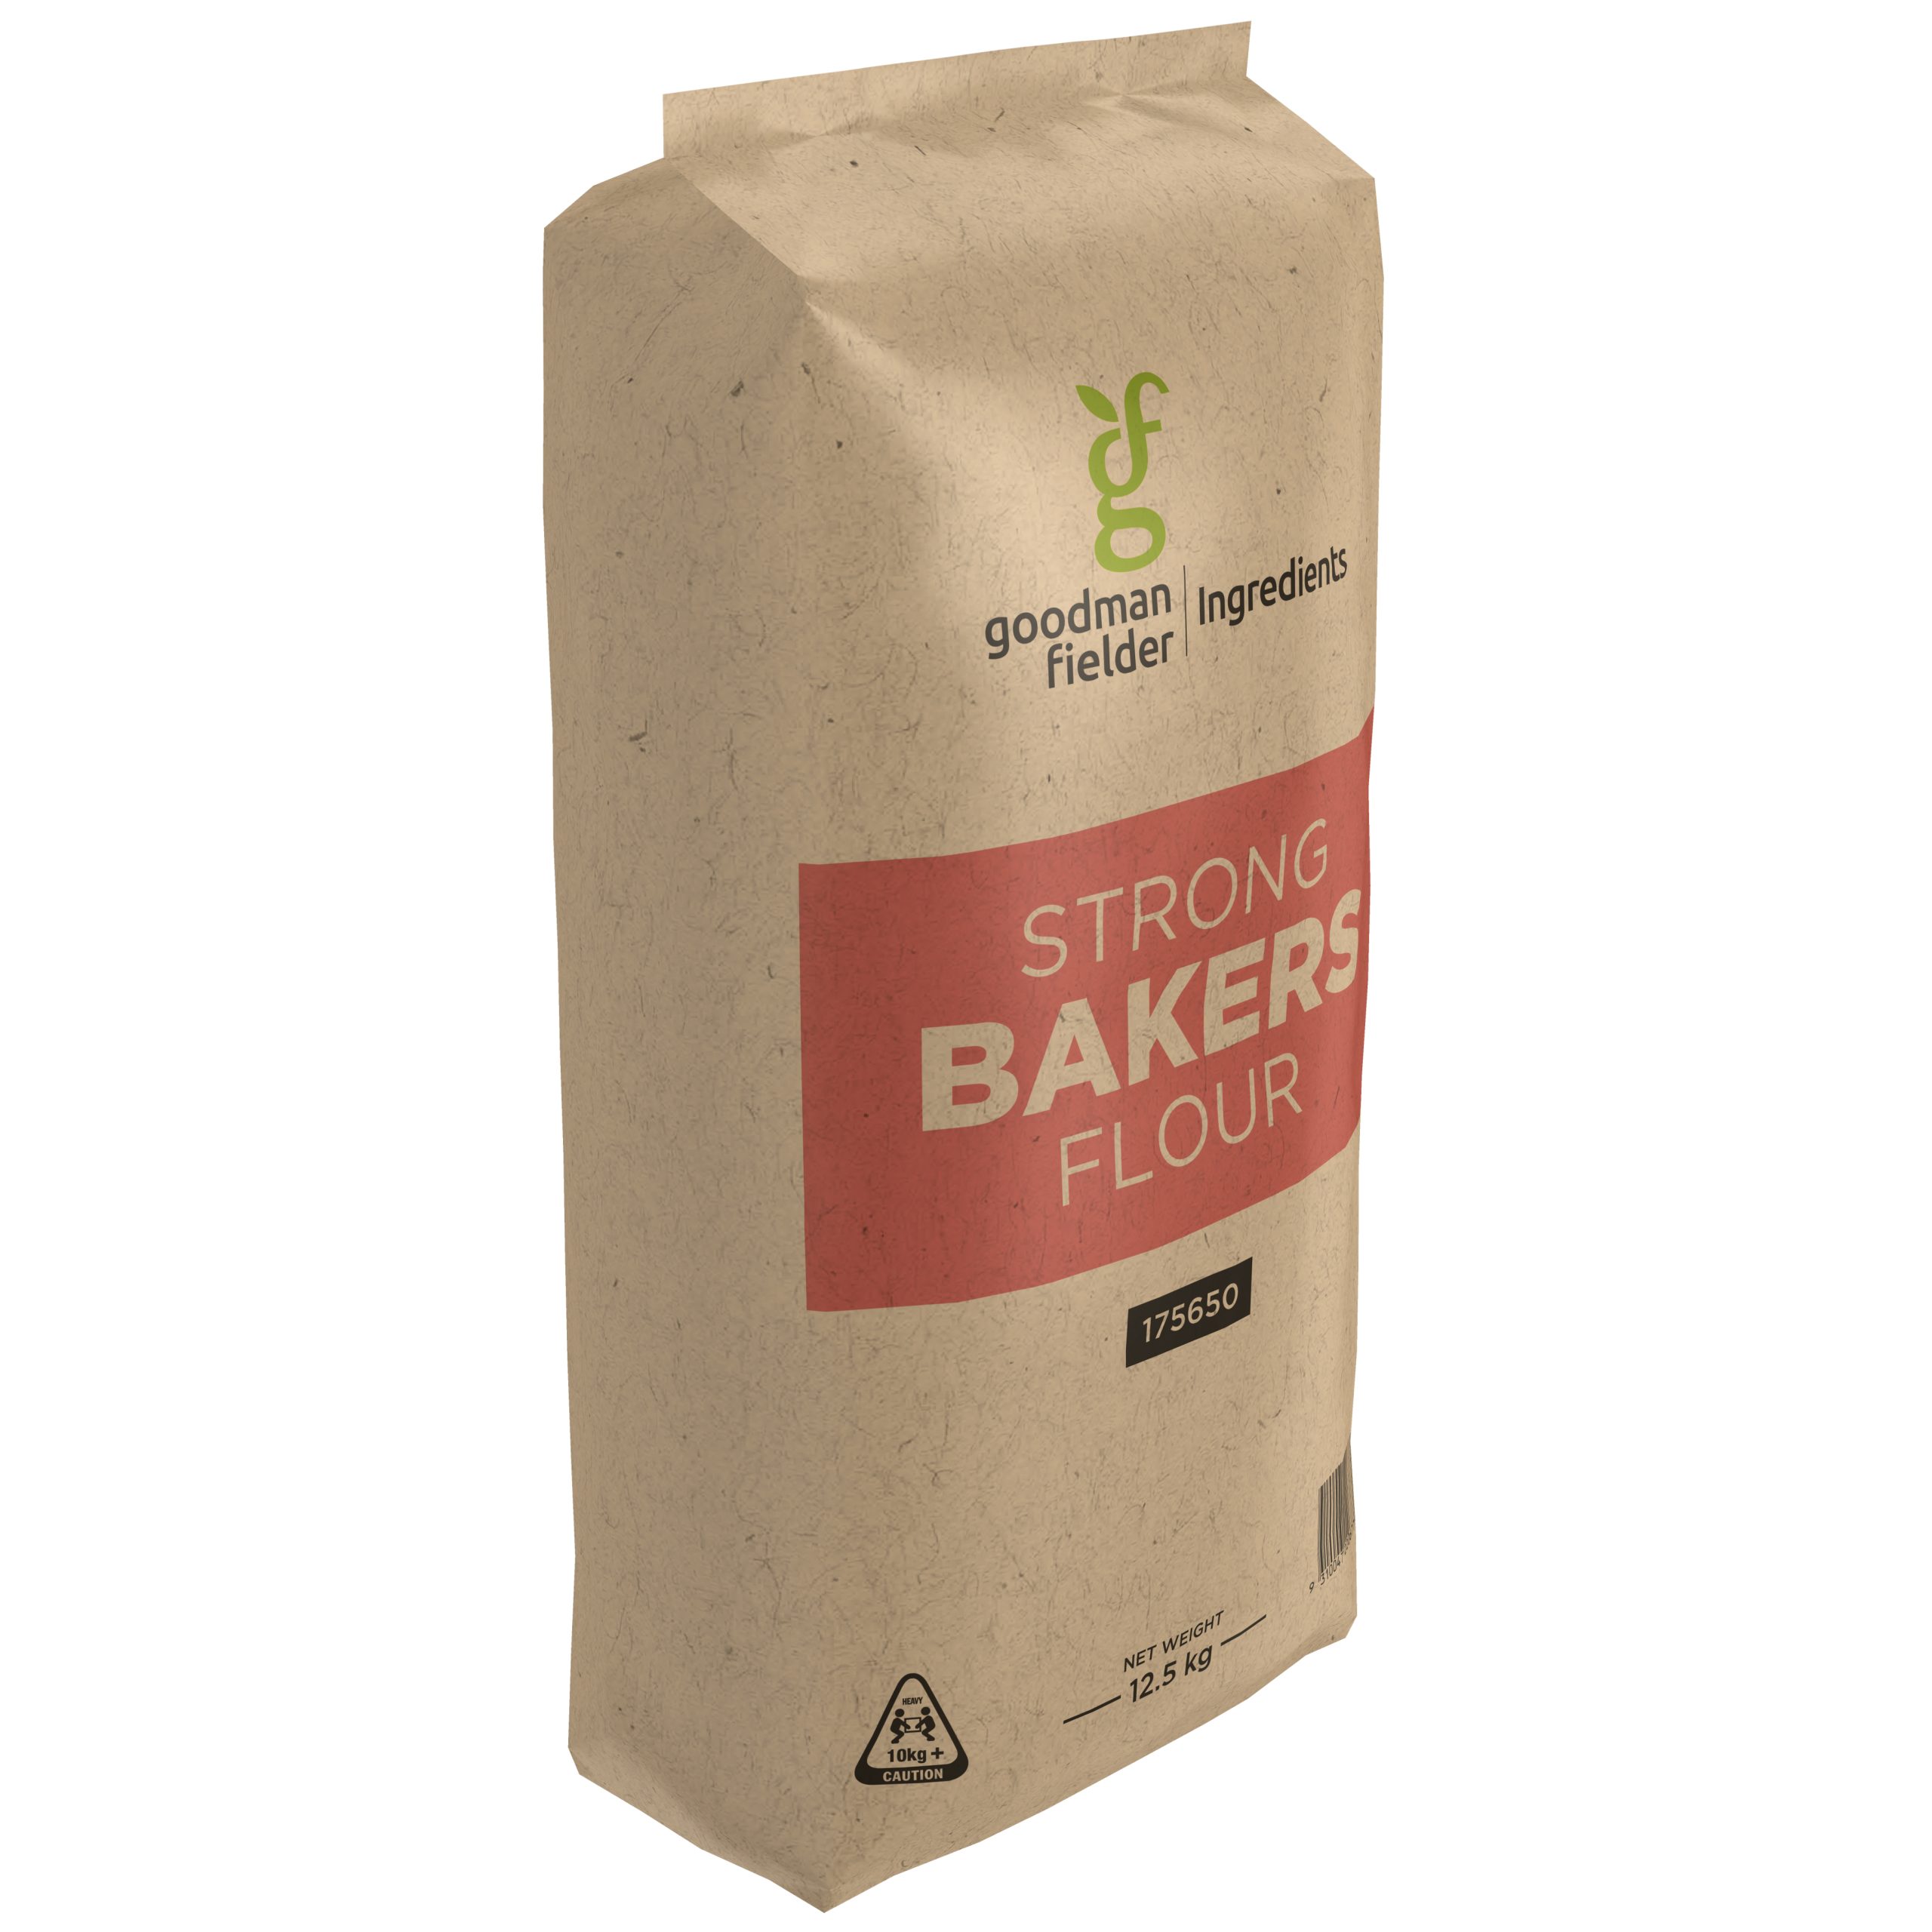 Goodman Fielder Ingredients Strong Bakers Flour 12.5kg